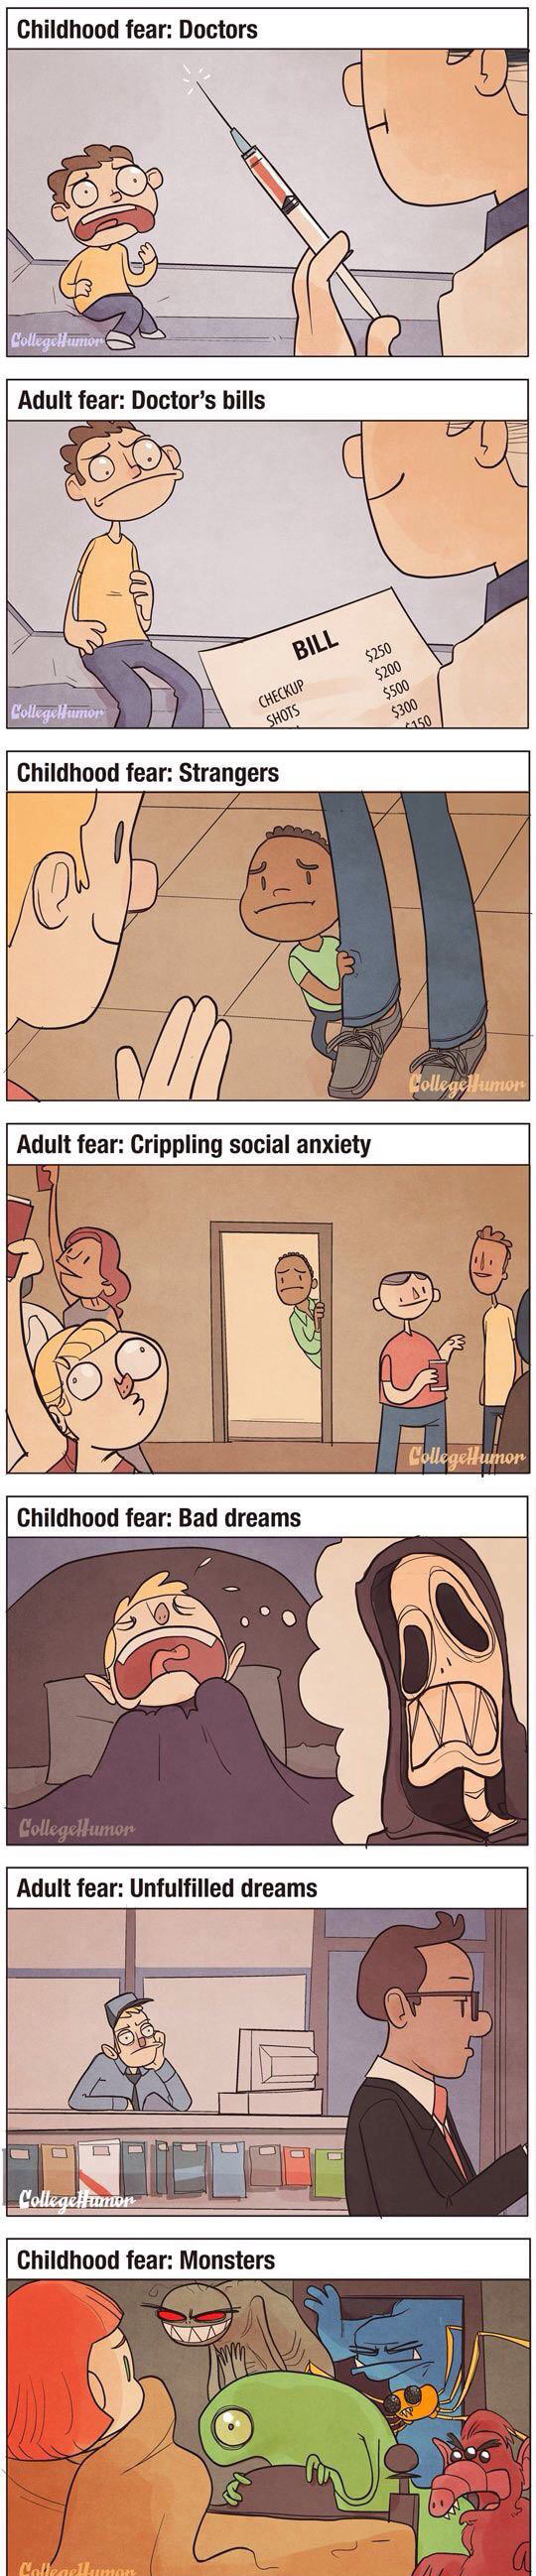 Childhood Vs. Adult Fears